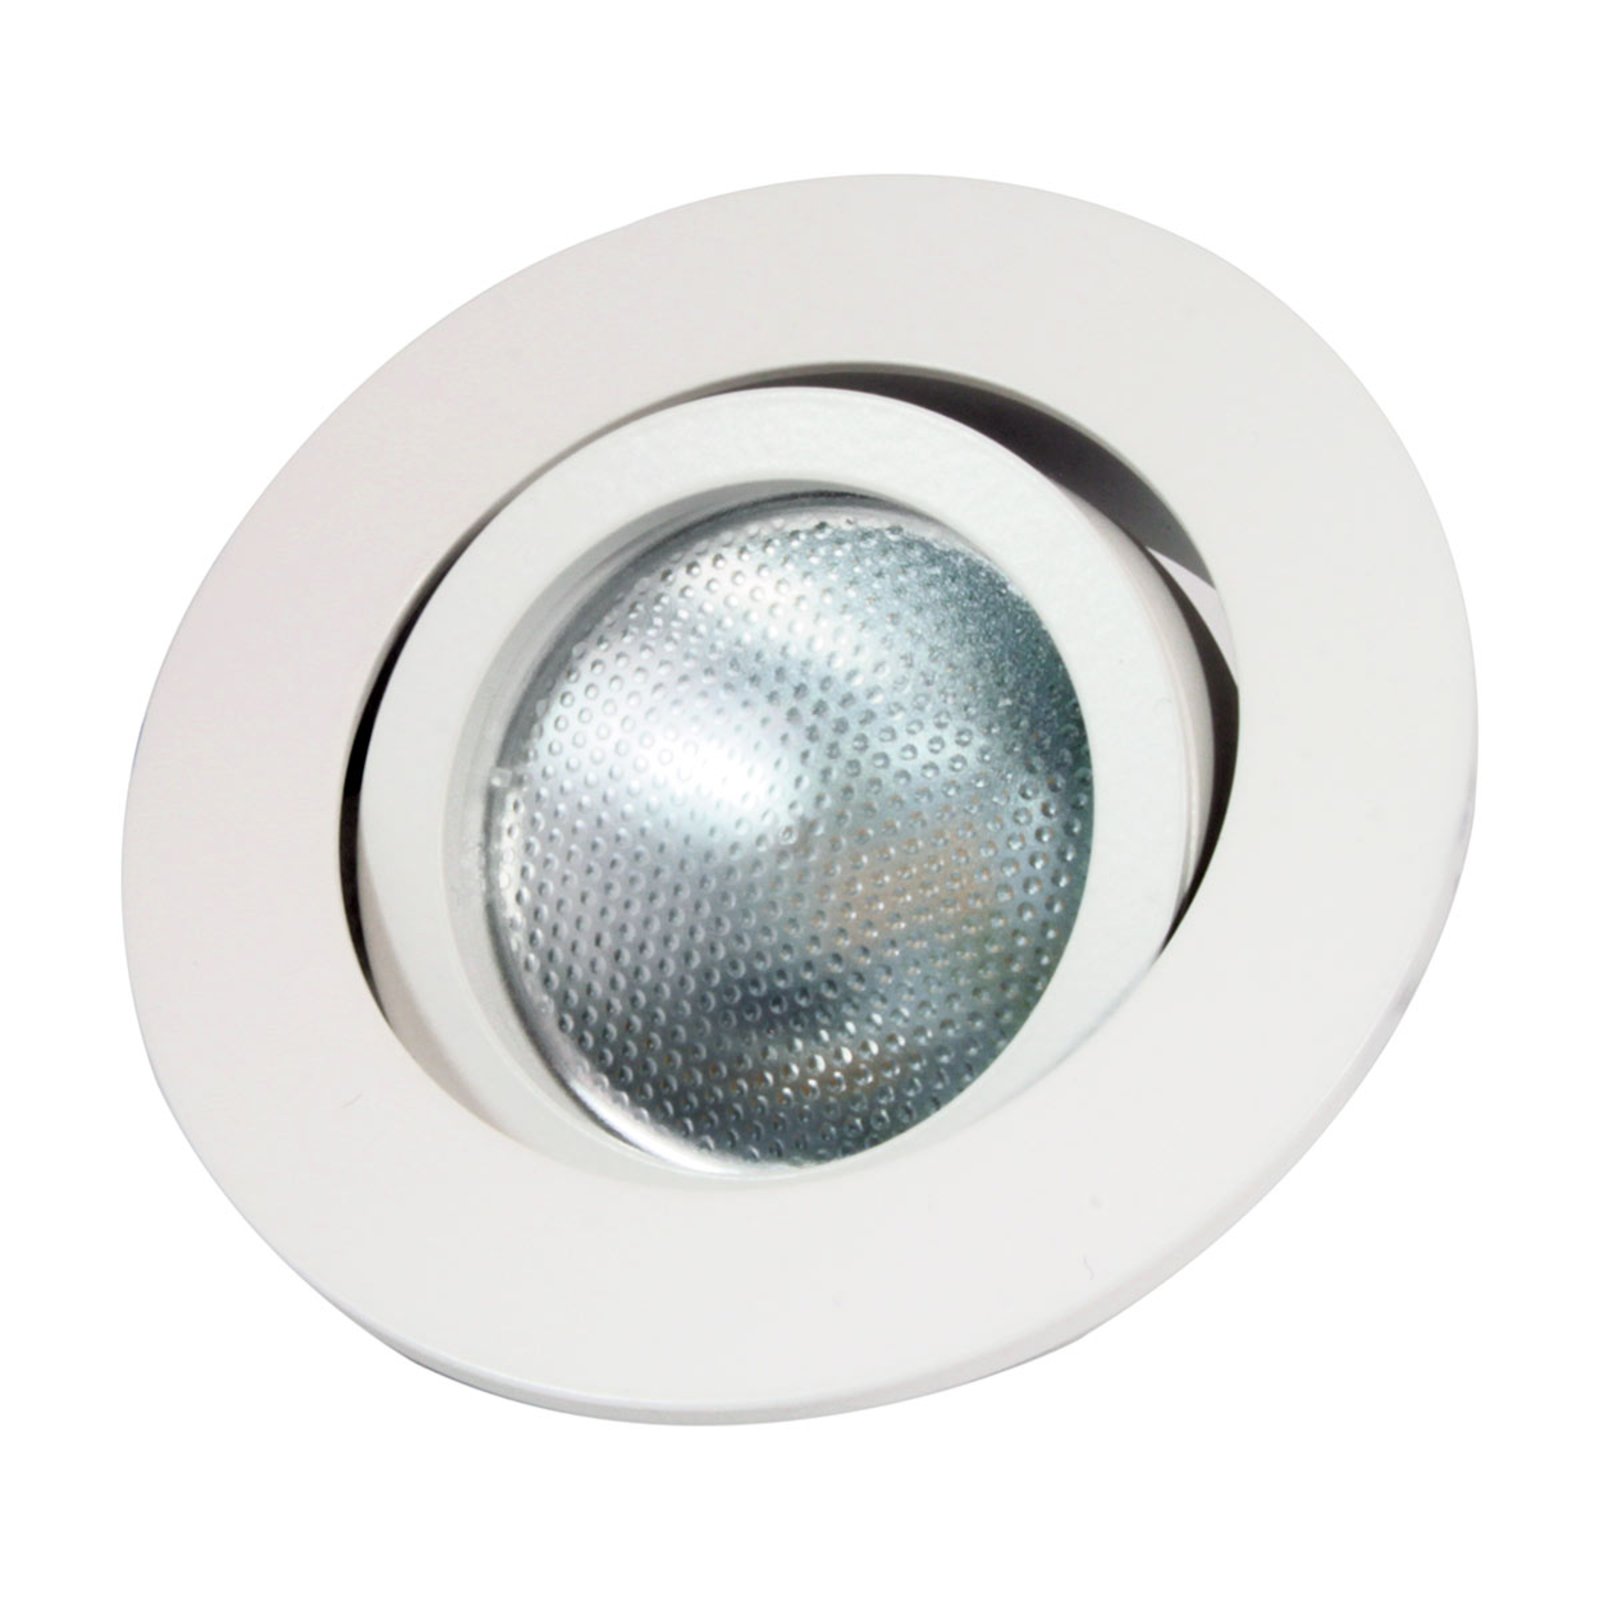 LED recessed spotlight Decoclic GU10/GU5.3, round, white